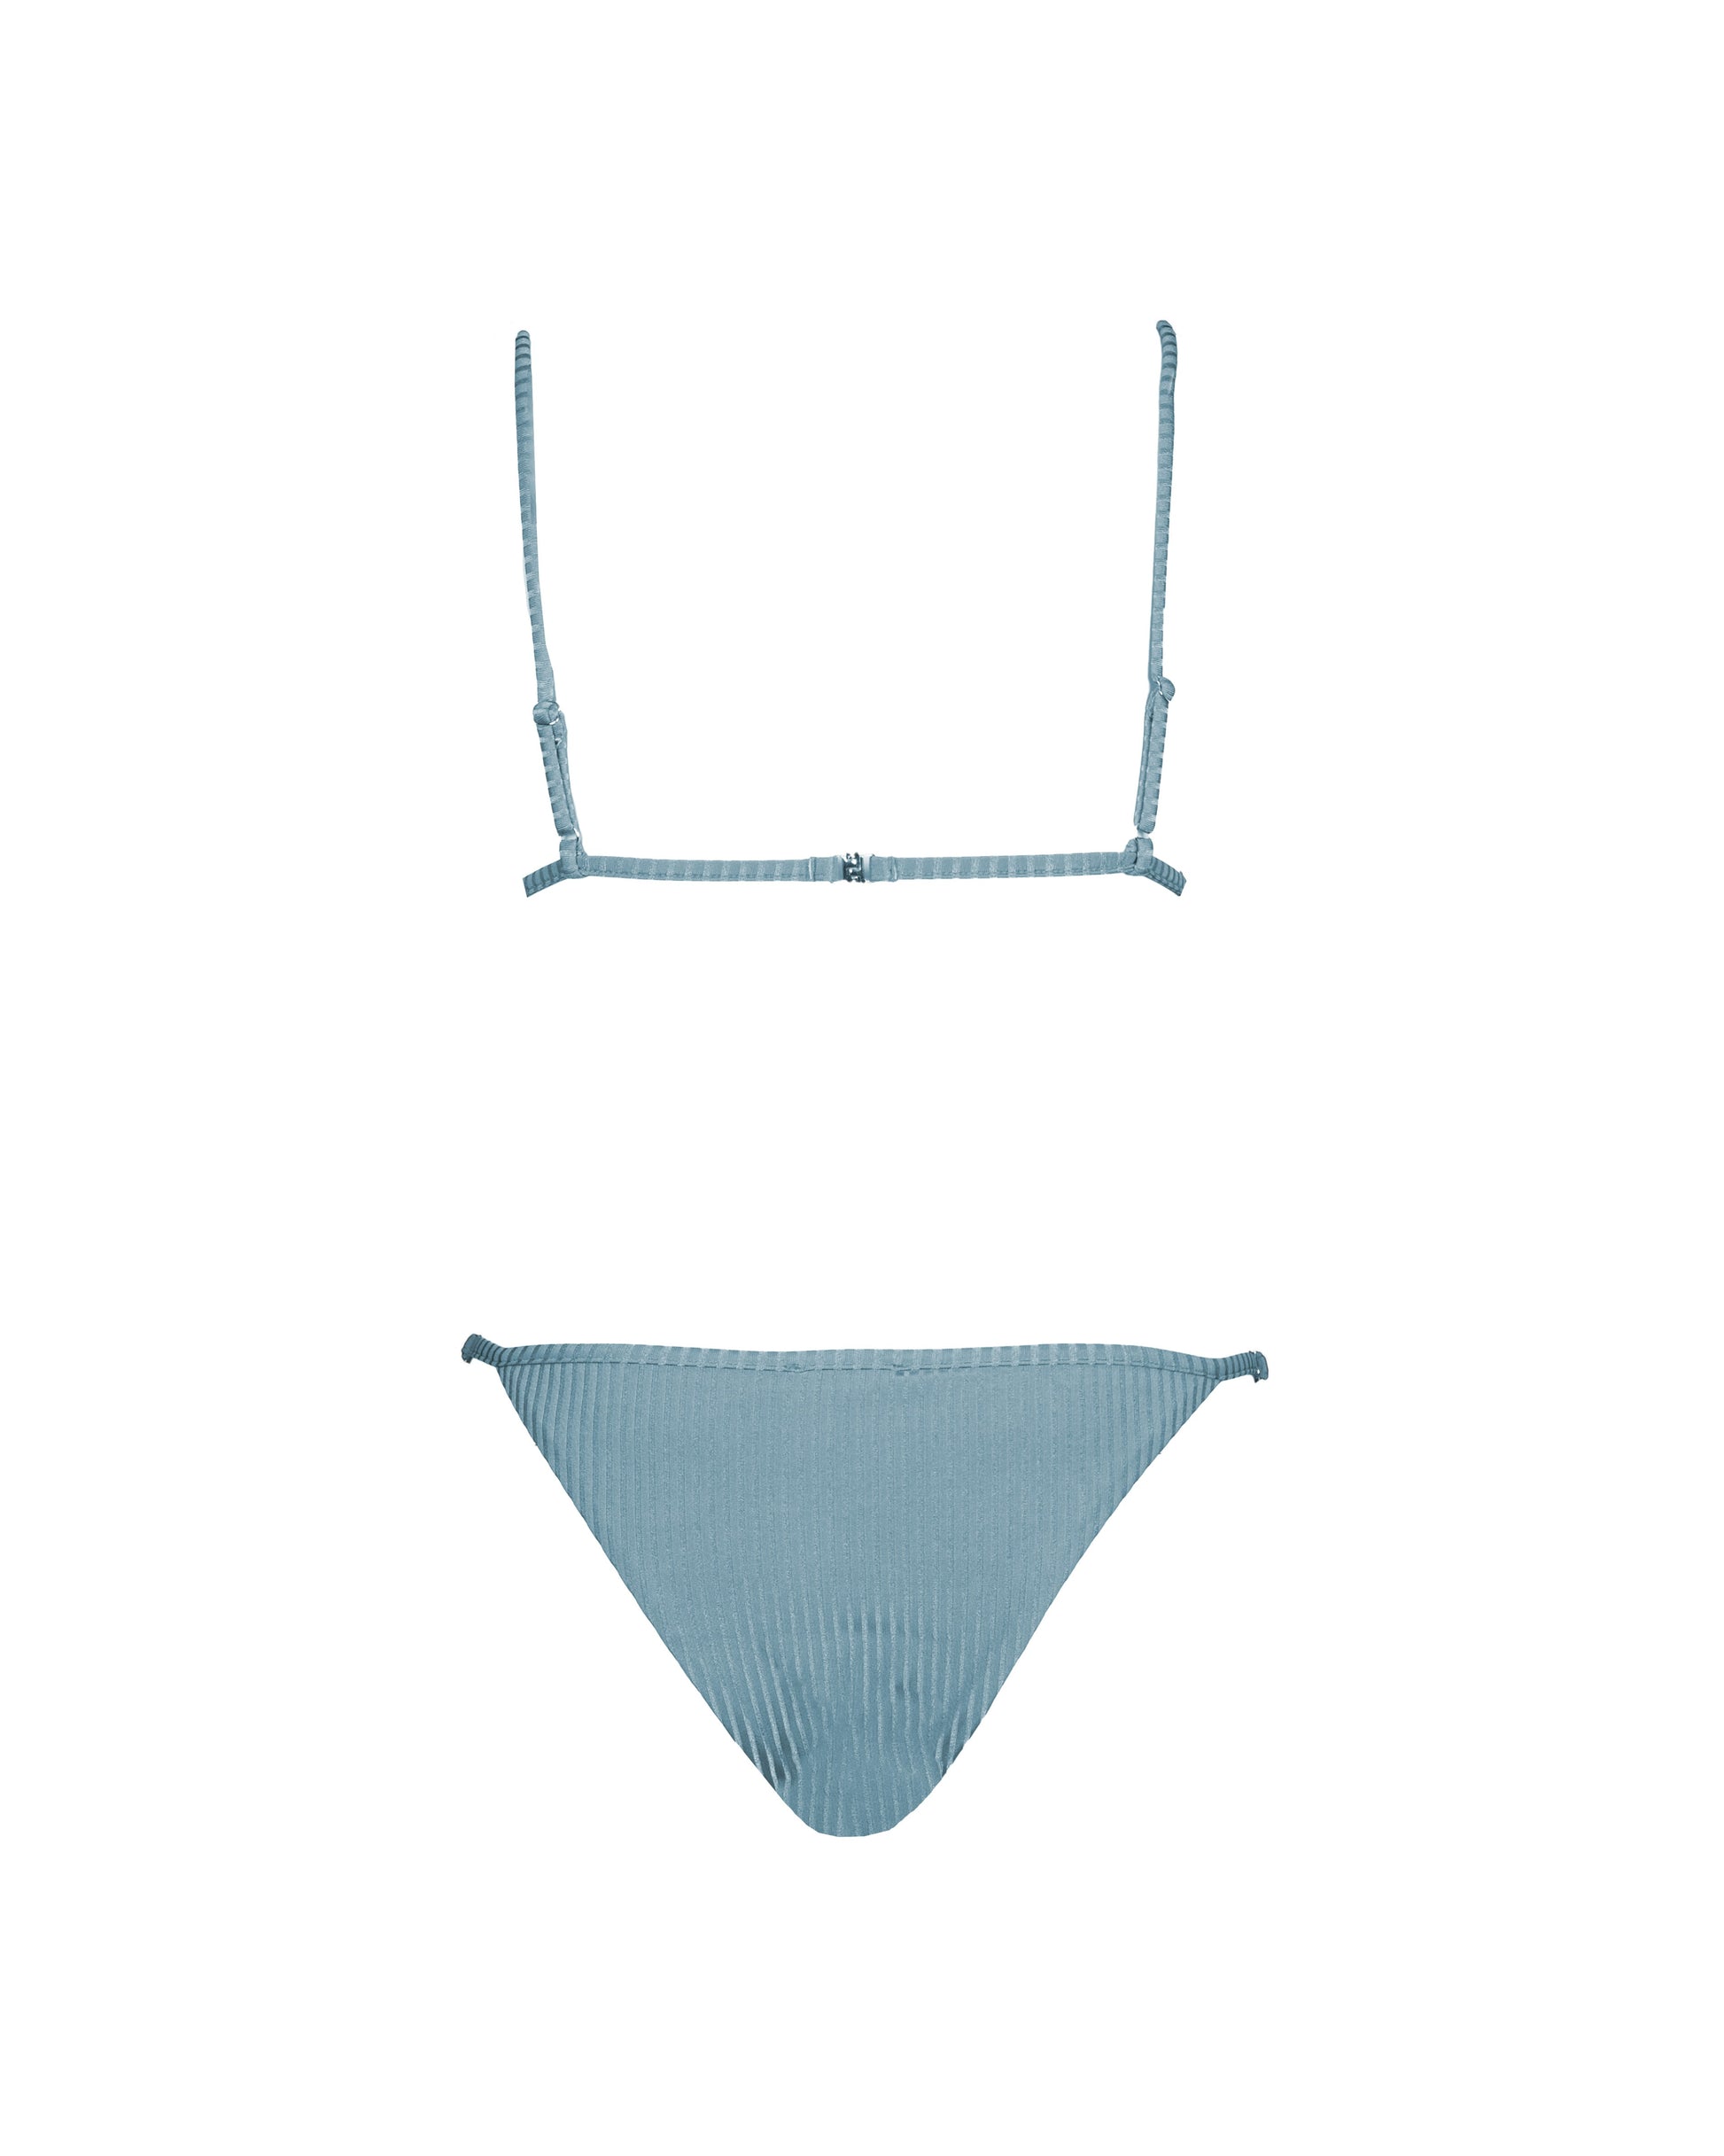 CLASSIC FINLAND Bikini – The